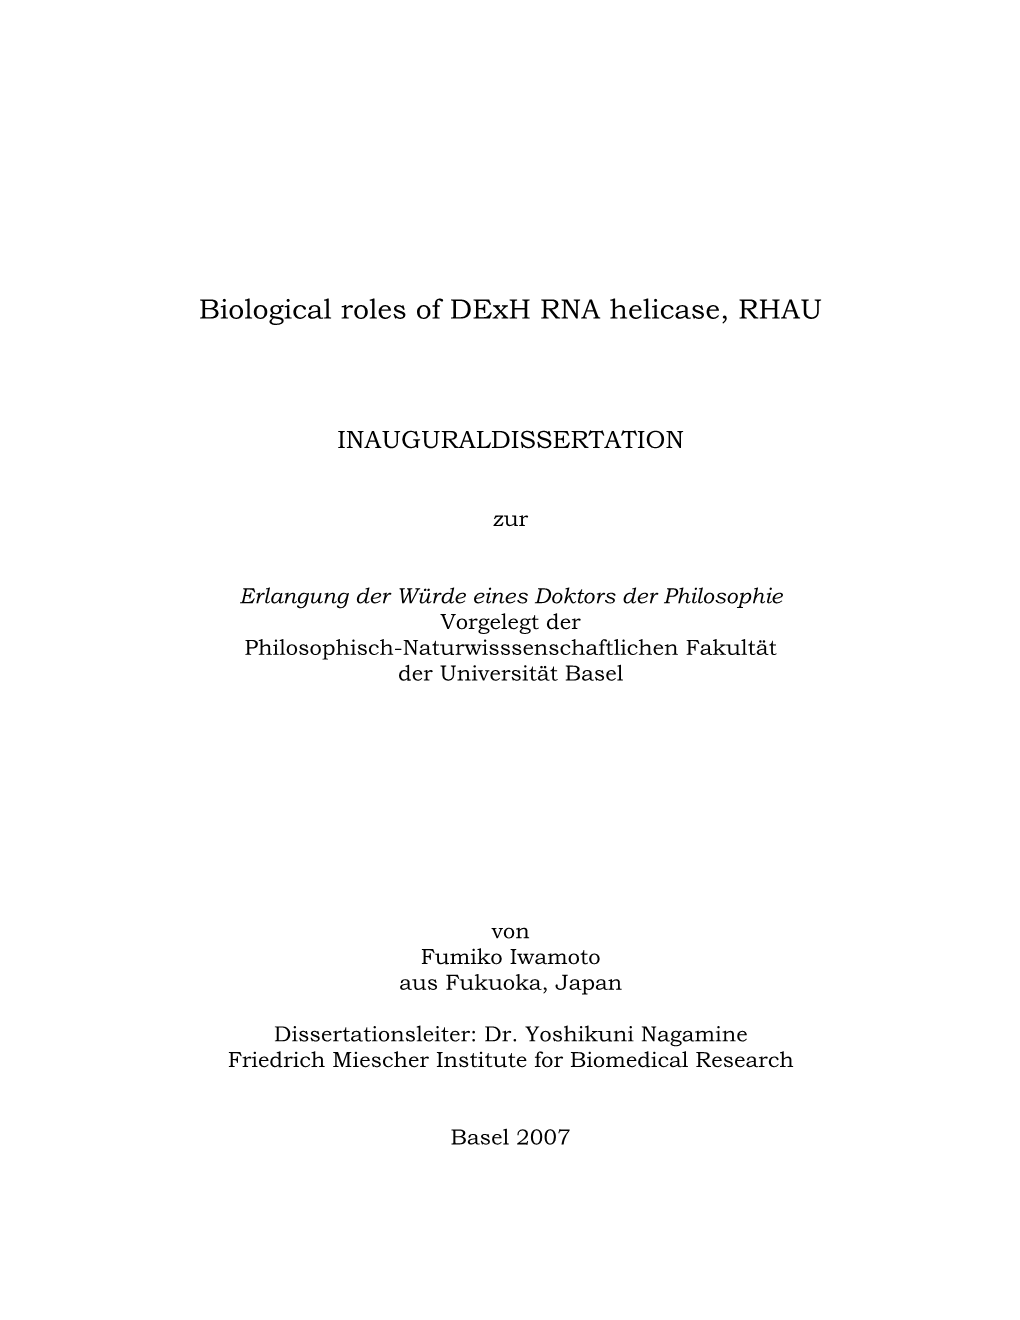 Biological Roles of Dexh RNA Helicase, RHAU